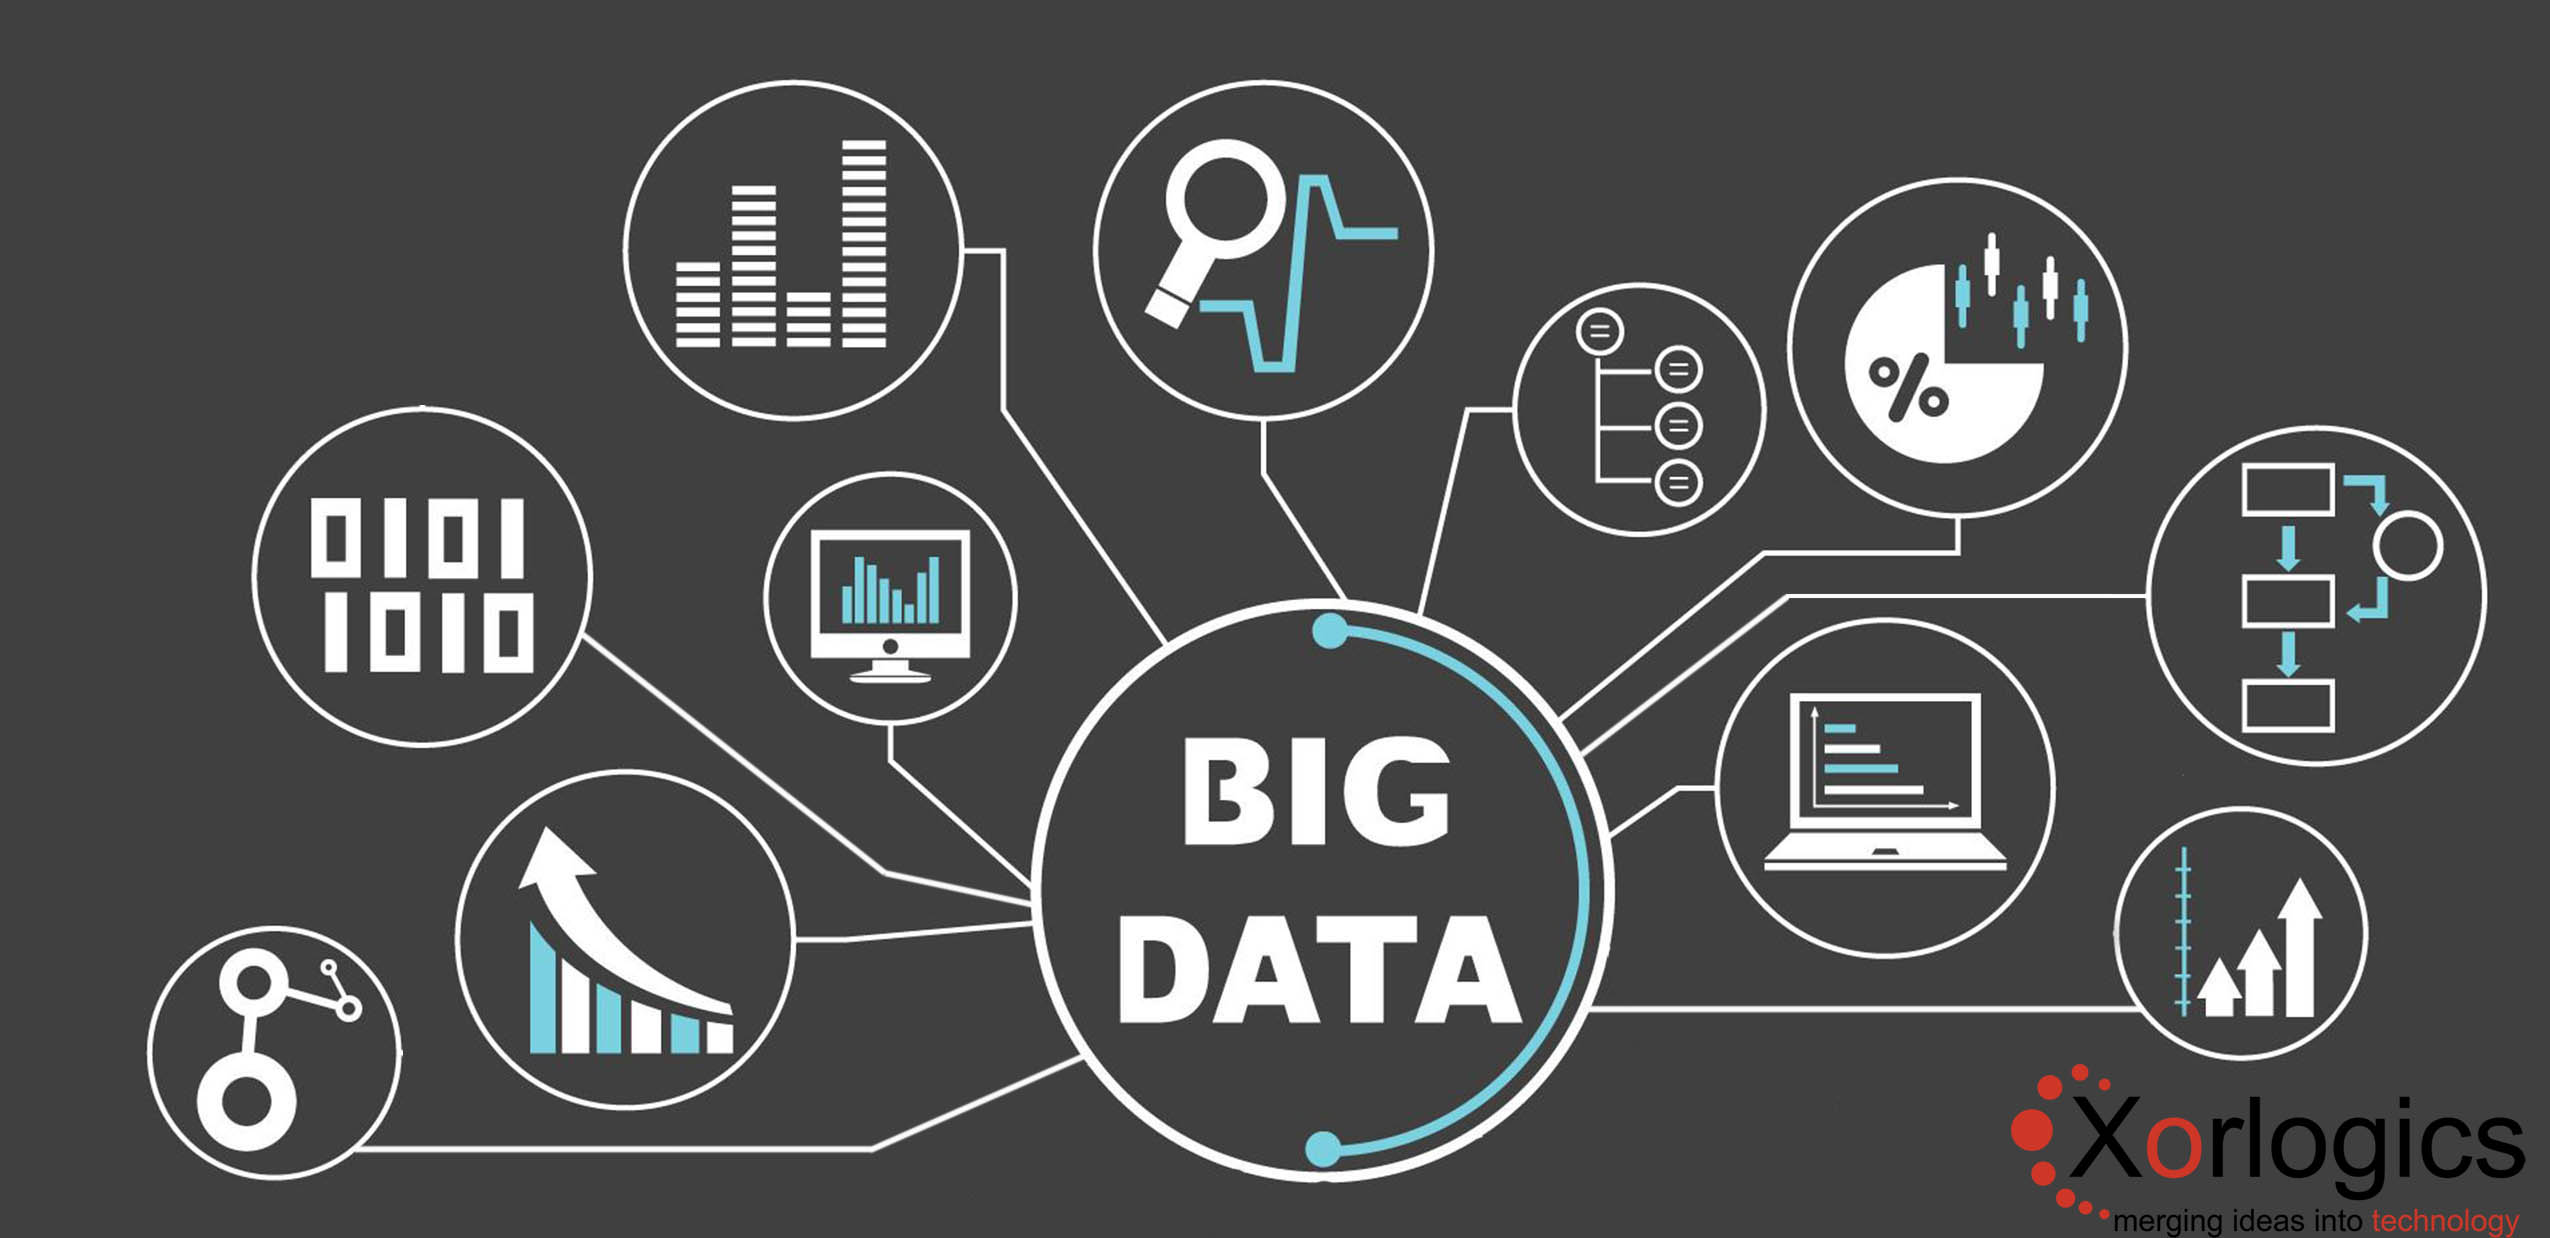 Big Data exhibition 2016